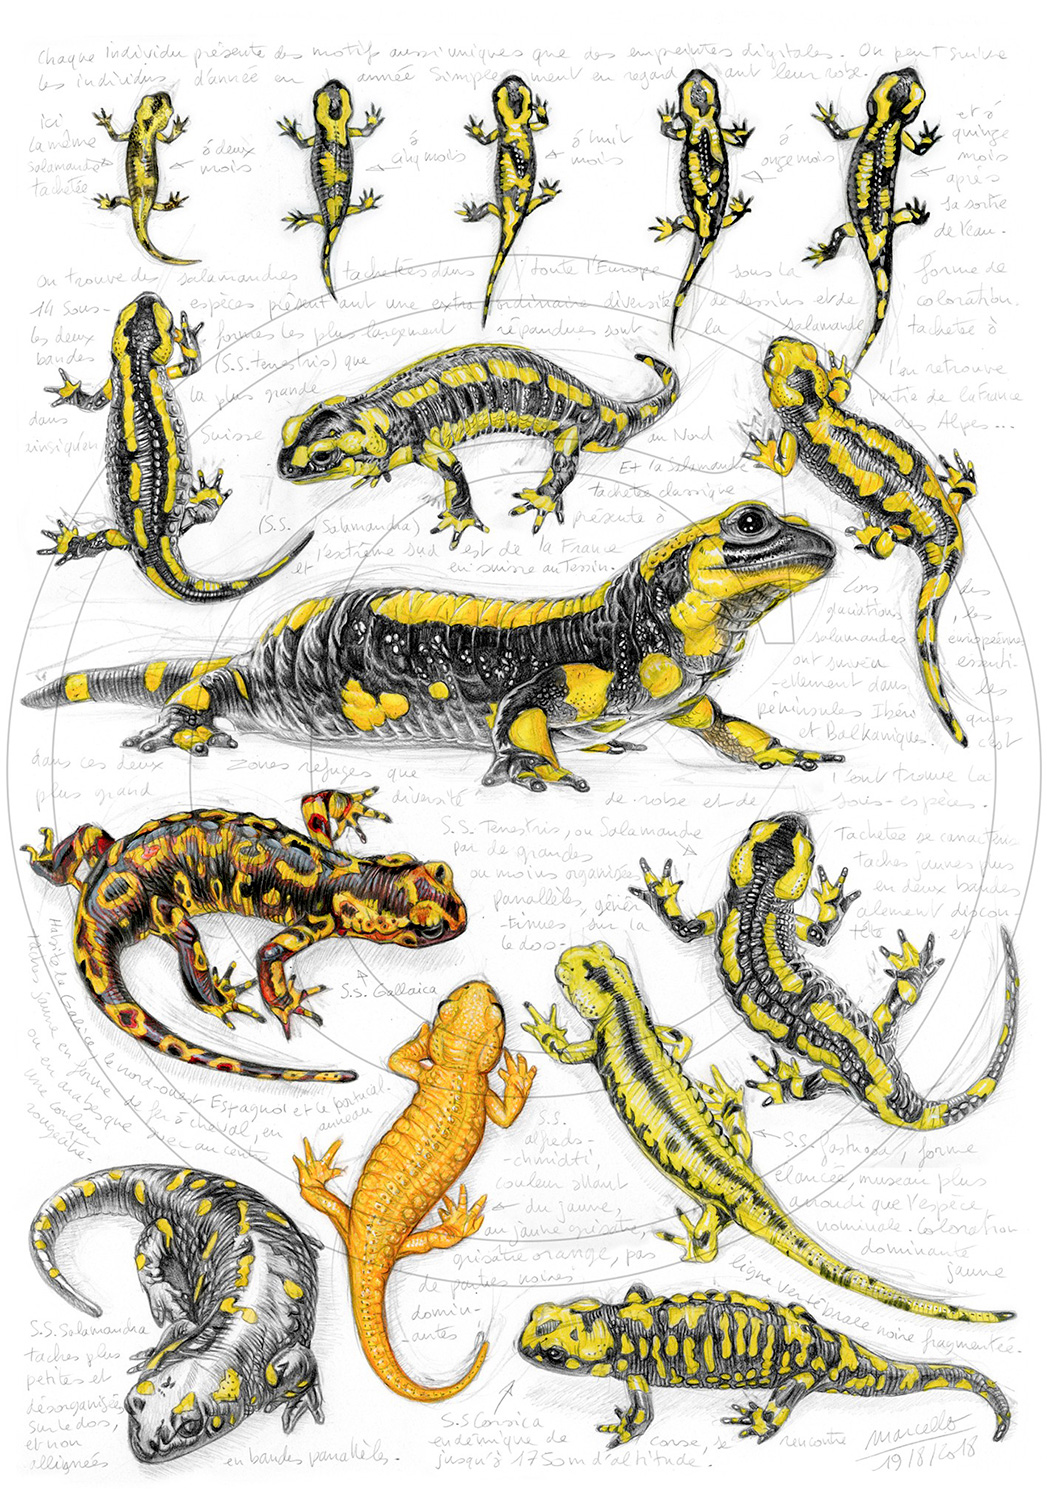 Marcello-art: Wild temperate zones 383 - Salamanders subspecies